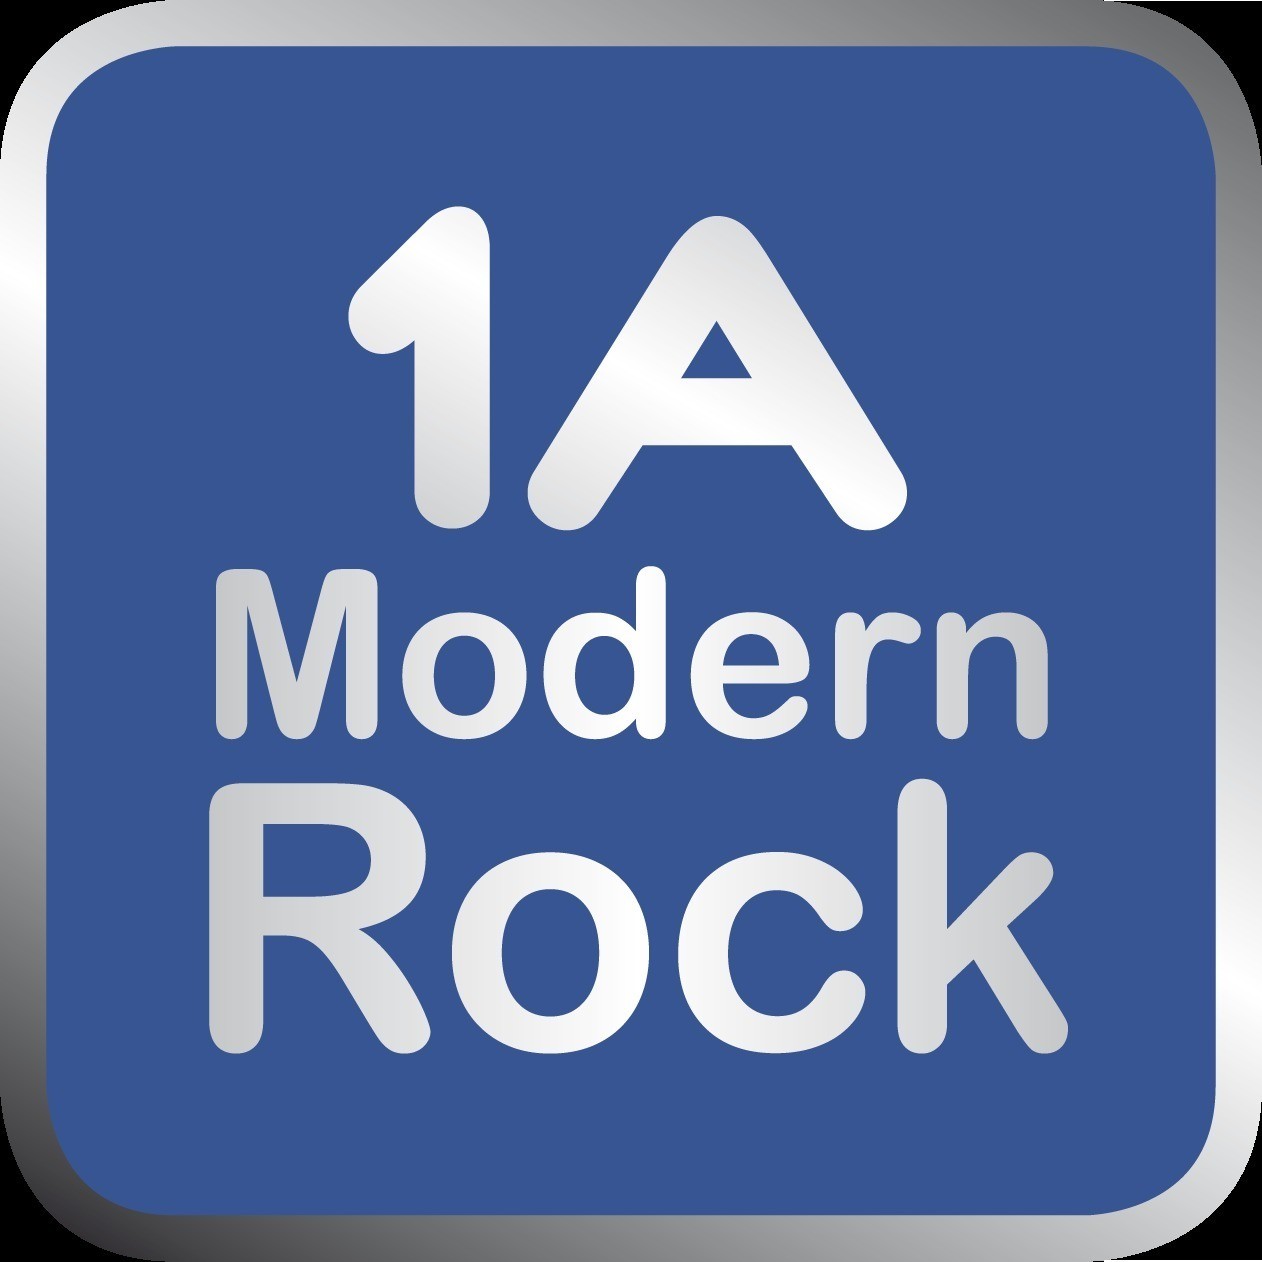 Profil 1A Modern Rock TV kanalı